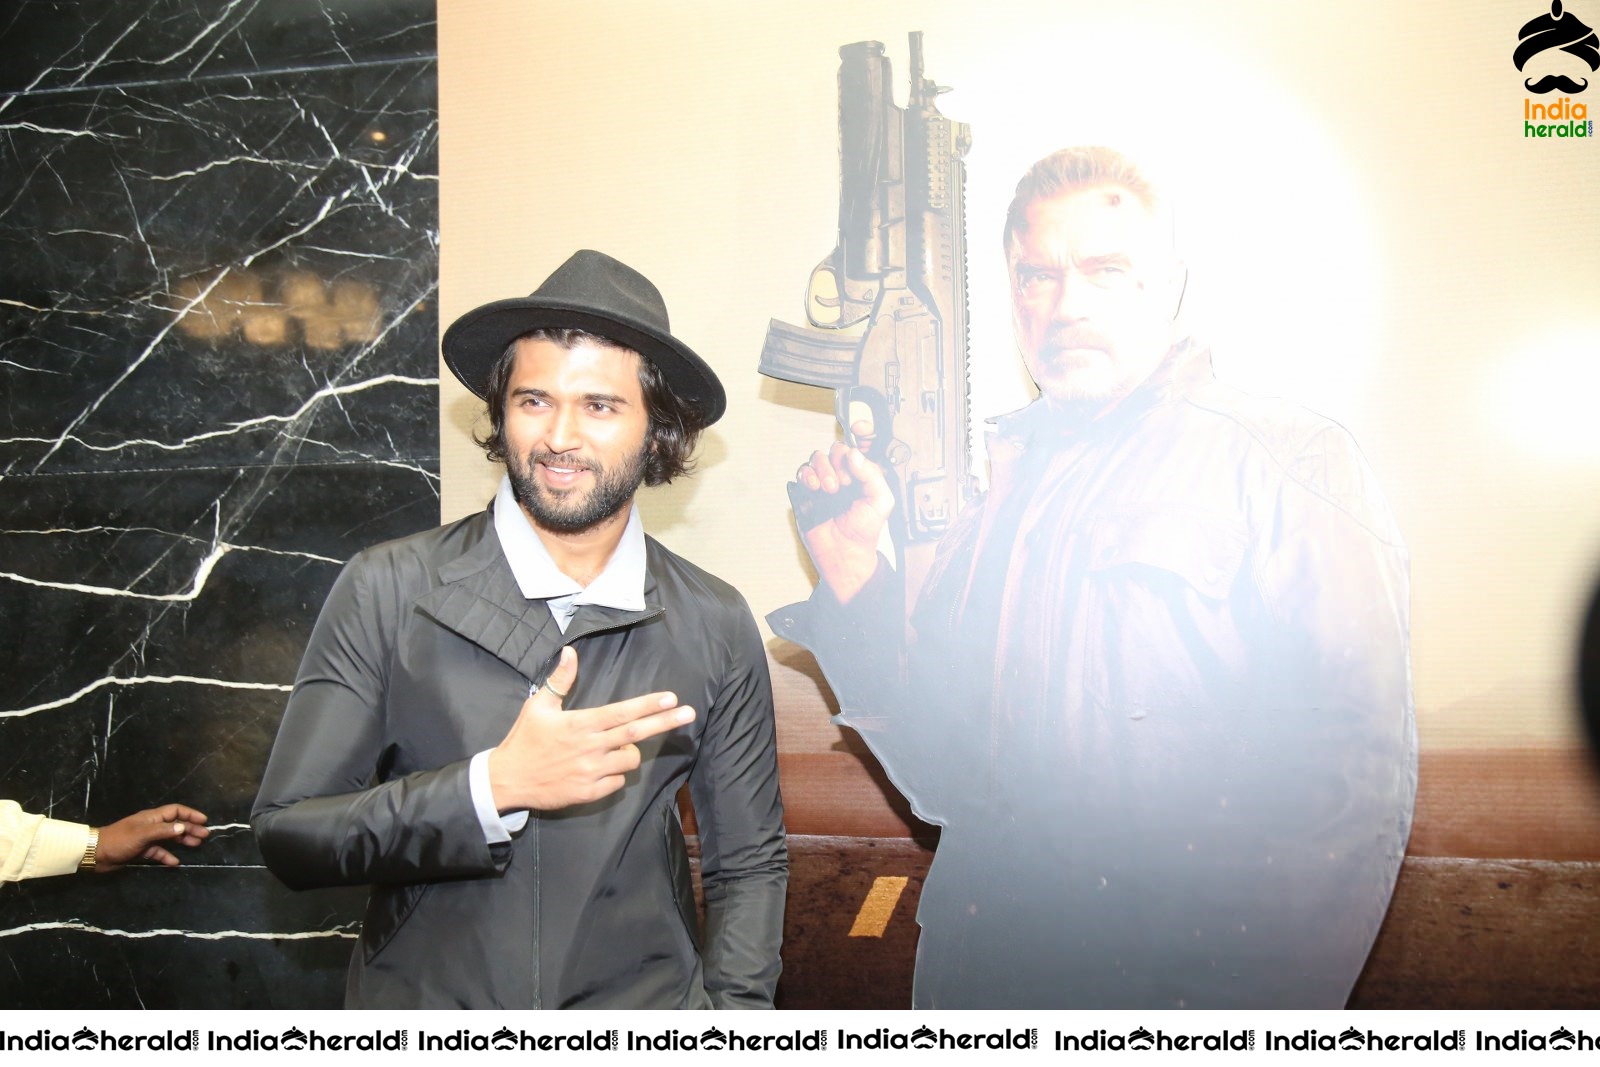 Terminator Dark Fate Telugu Trailer Launch by Vijay Deverakonda Set 1